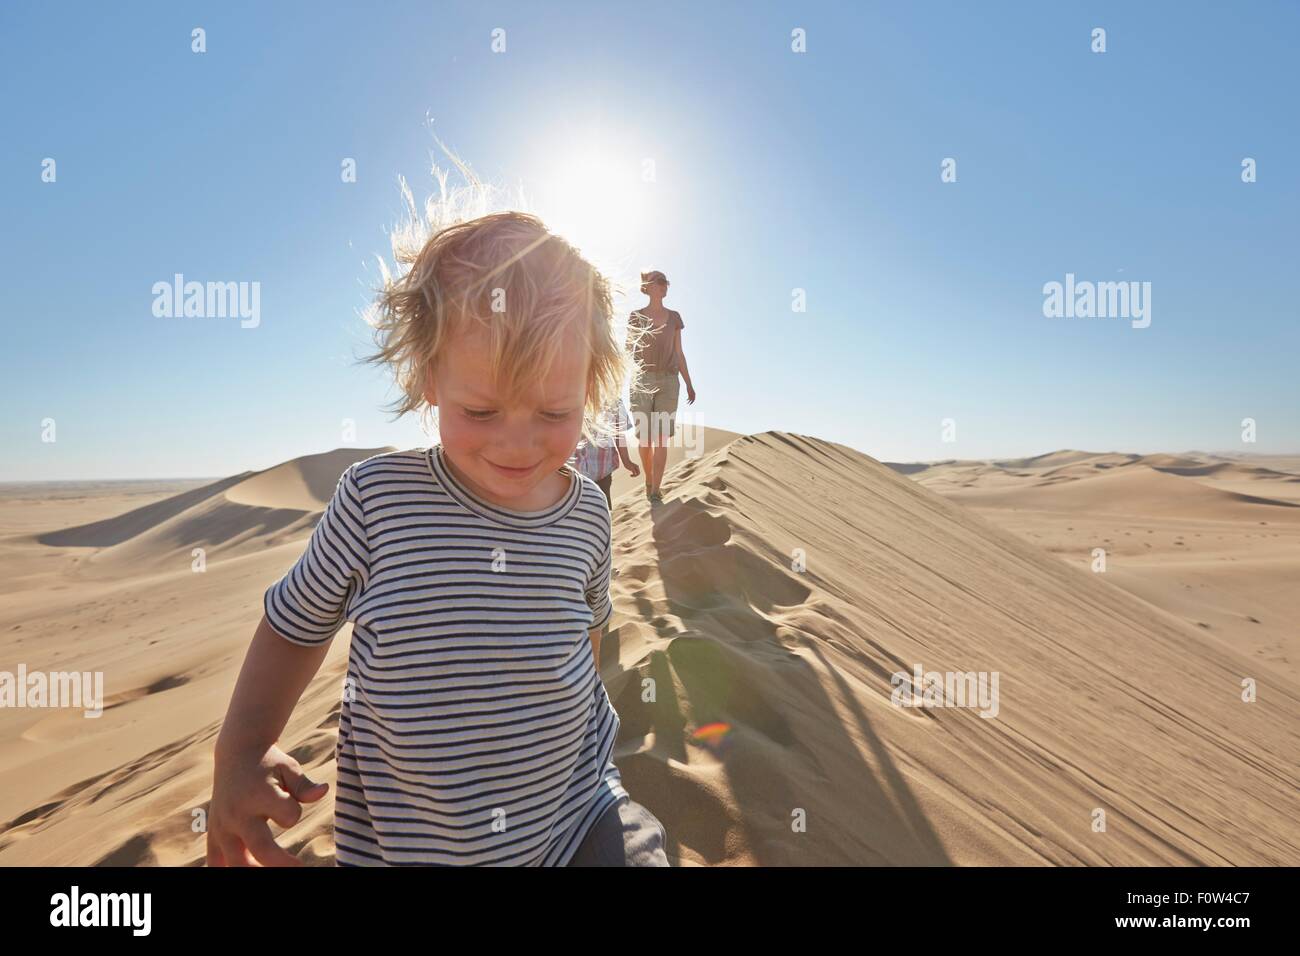 Madre e figli camminando sulle dune di sabbia, dune 7, Namib-Naukluft National Park, Africa Foto Stock